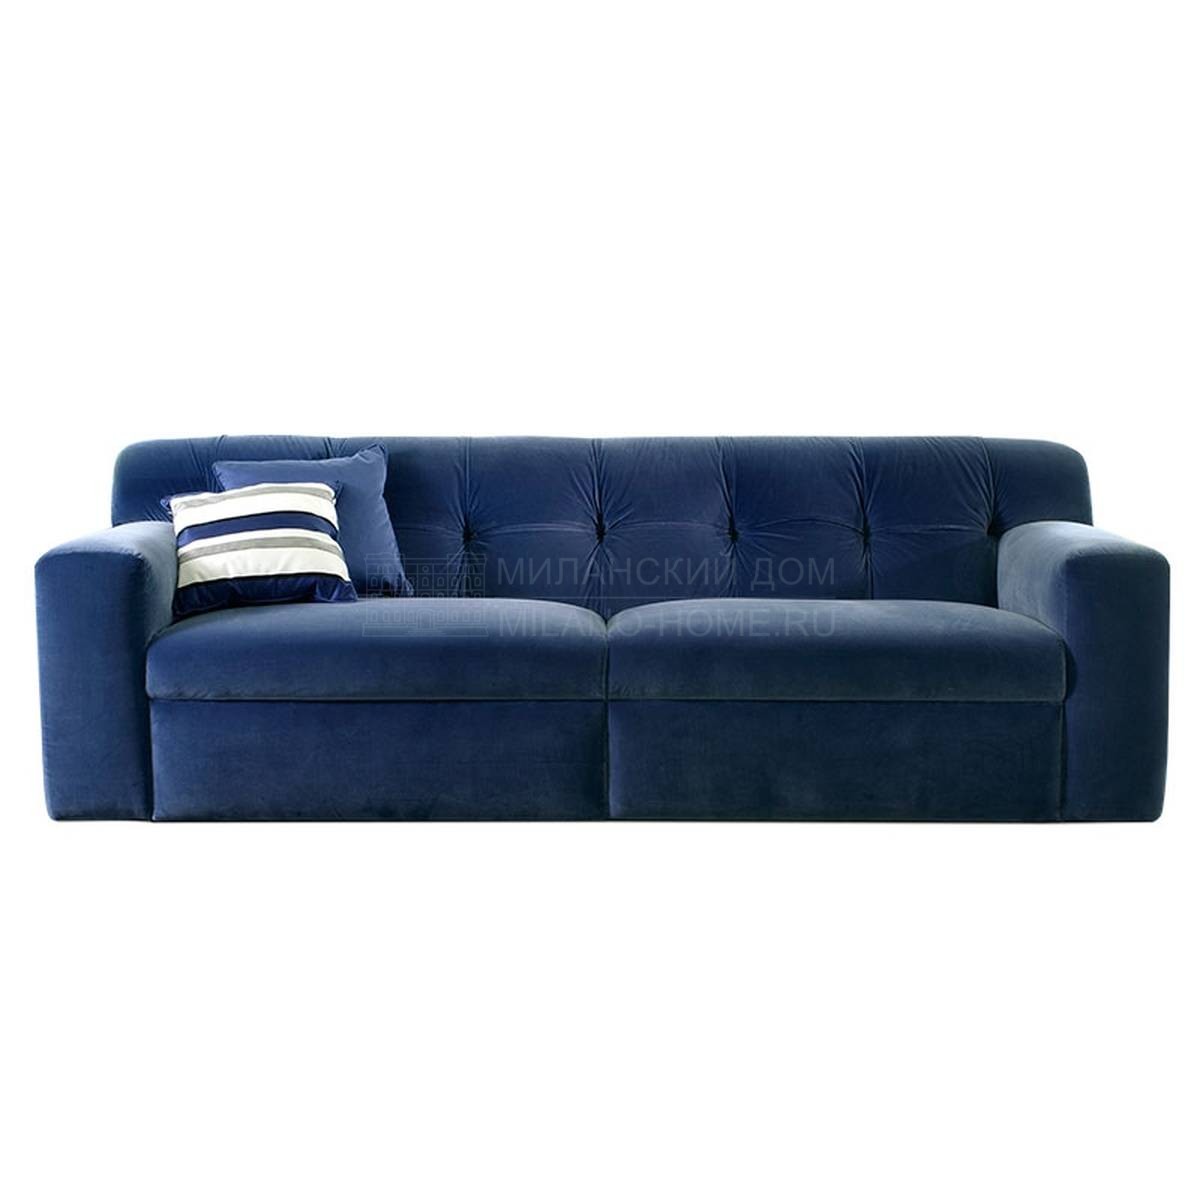 Прямой диван Nino/ sofa из Италии фабрики SOFTHOUSE